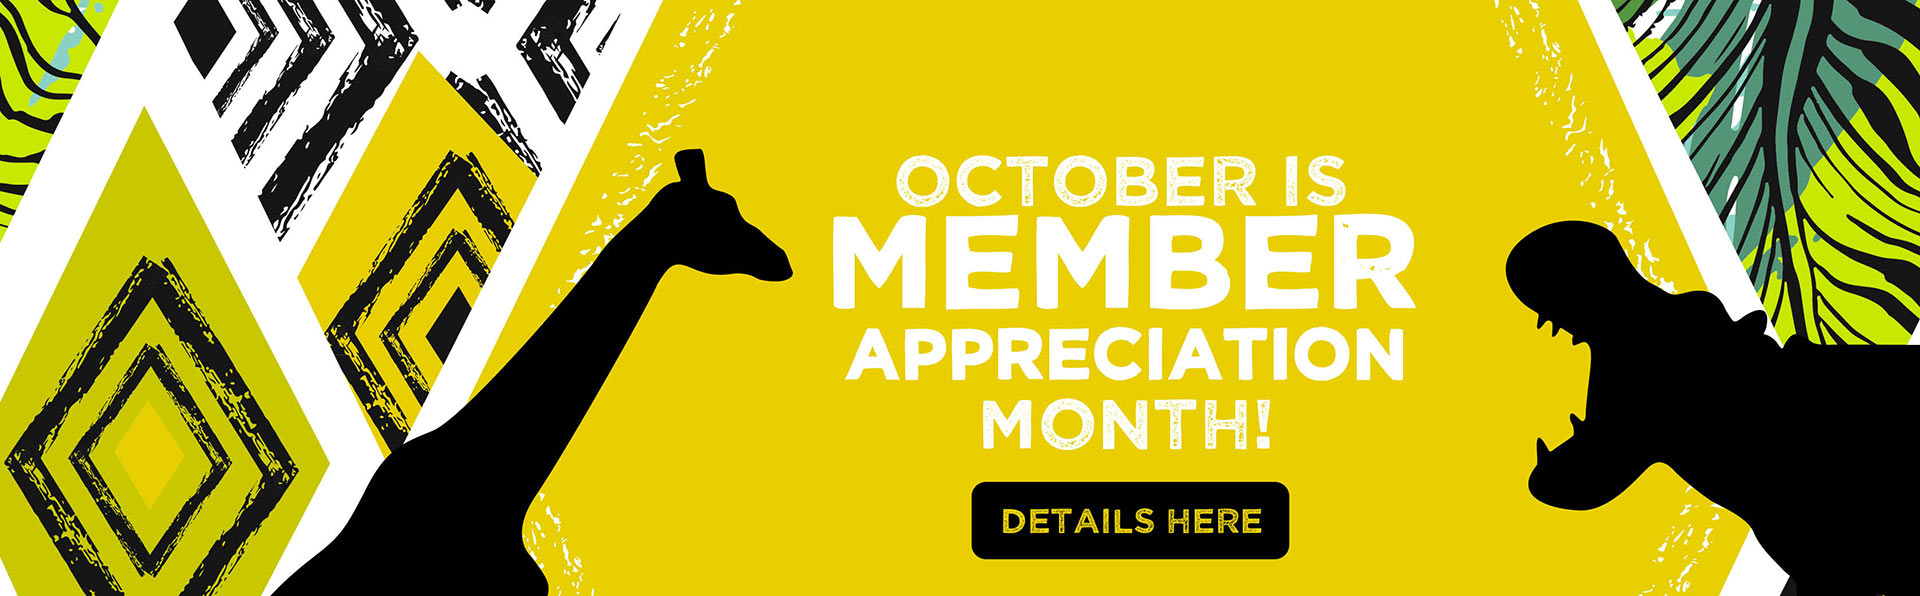 October is member appreciation month